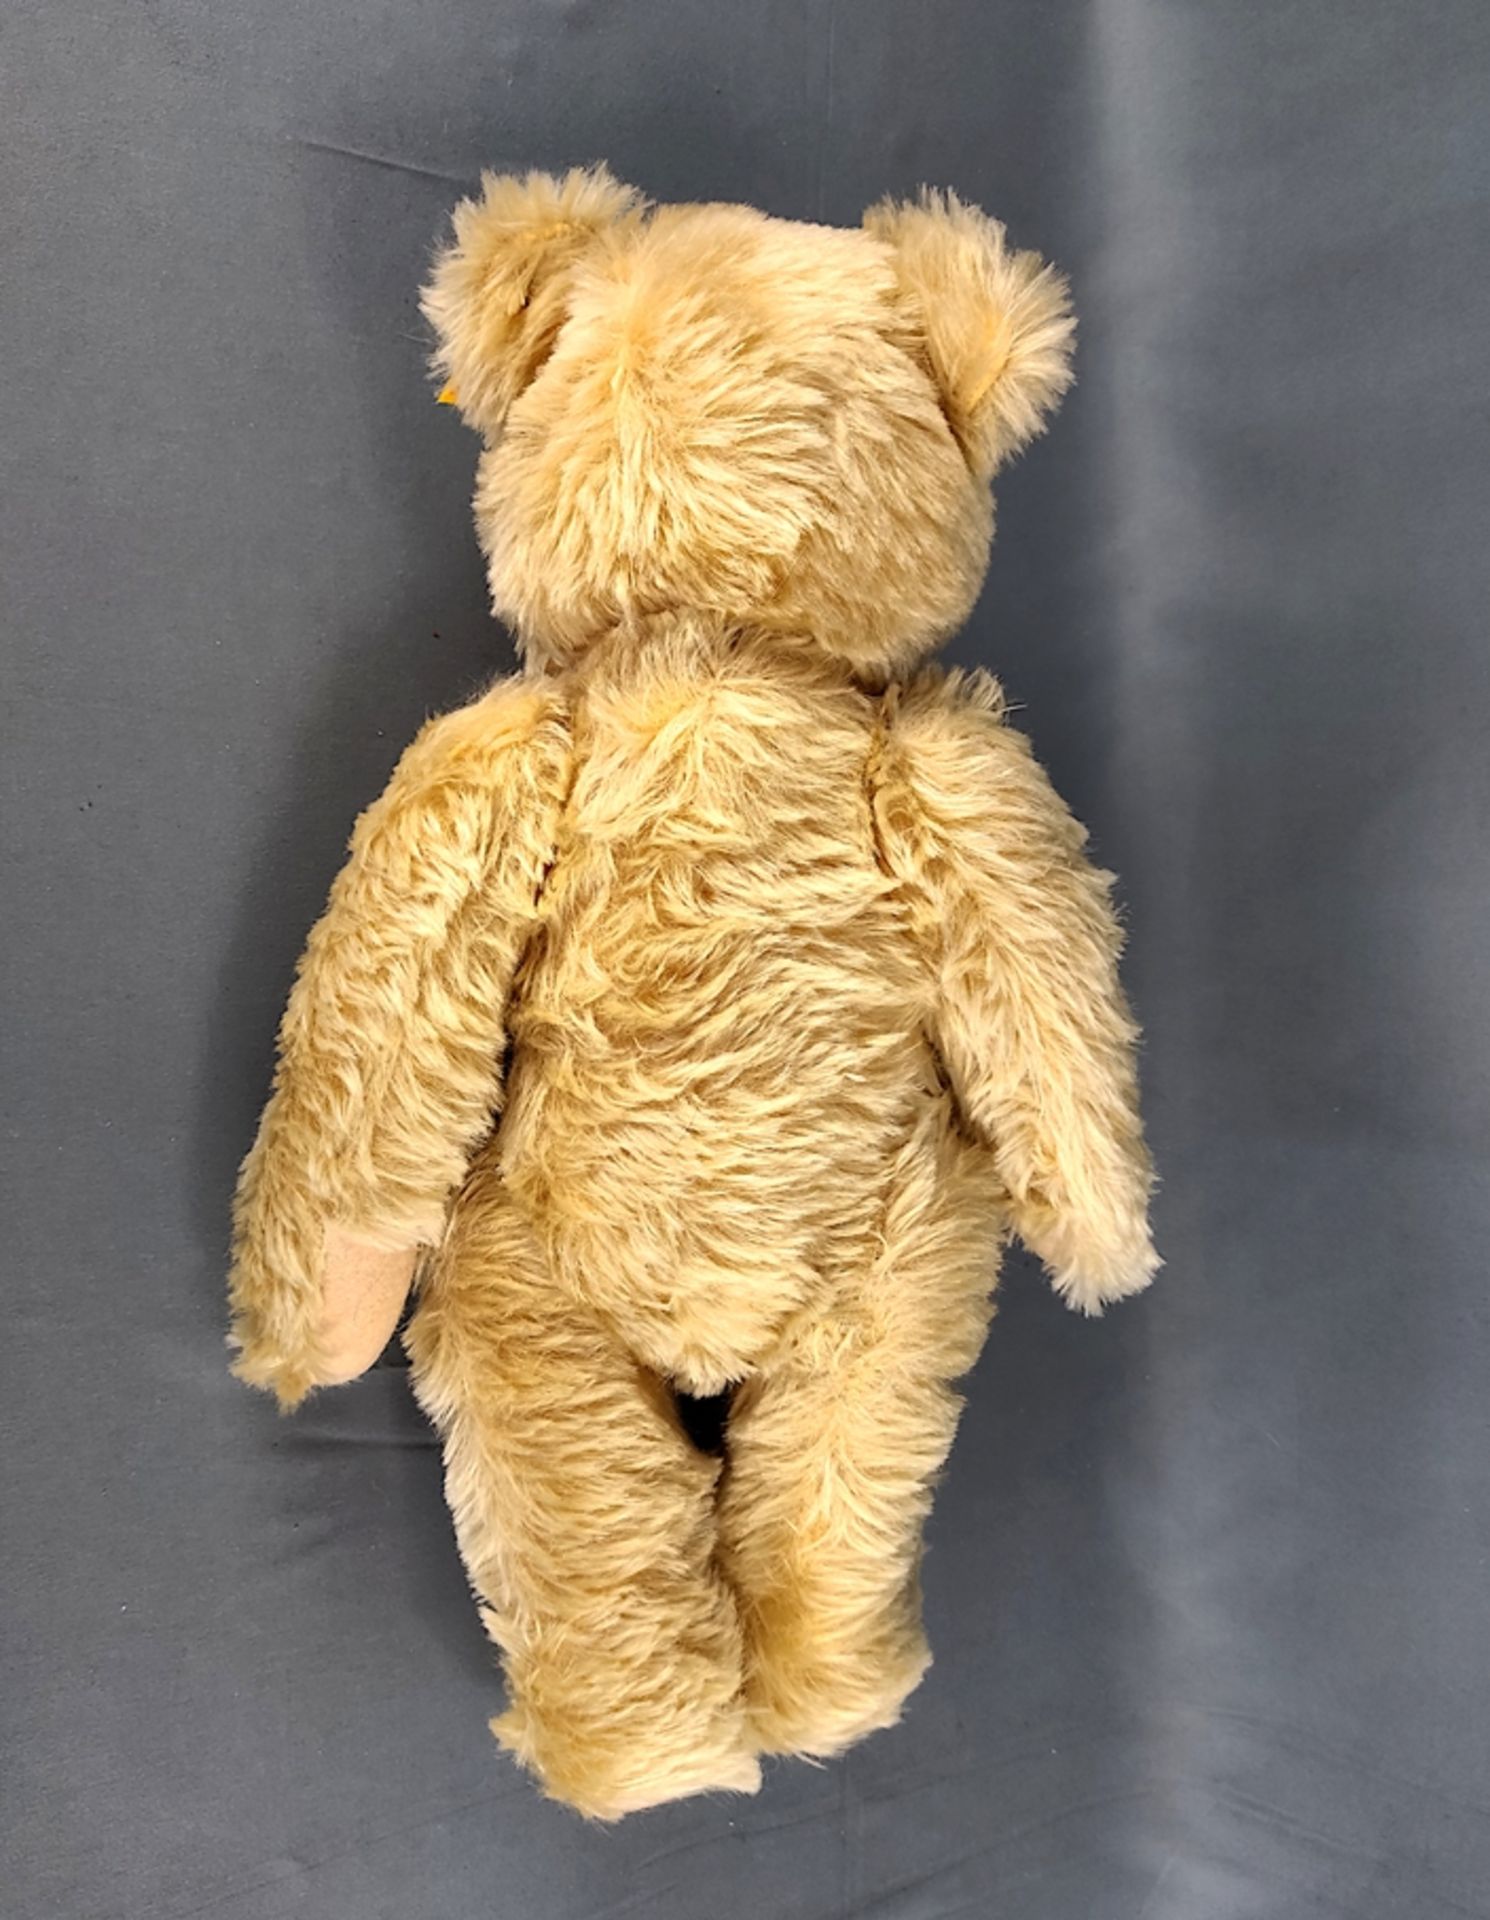 Steiff Replika Teddybär, 010408, beigefarbenes Mohair, 1991-1995, Kippstimme, Höhe 42cm - Bild 2 aus 3